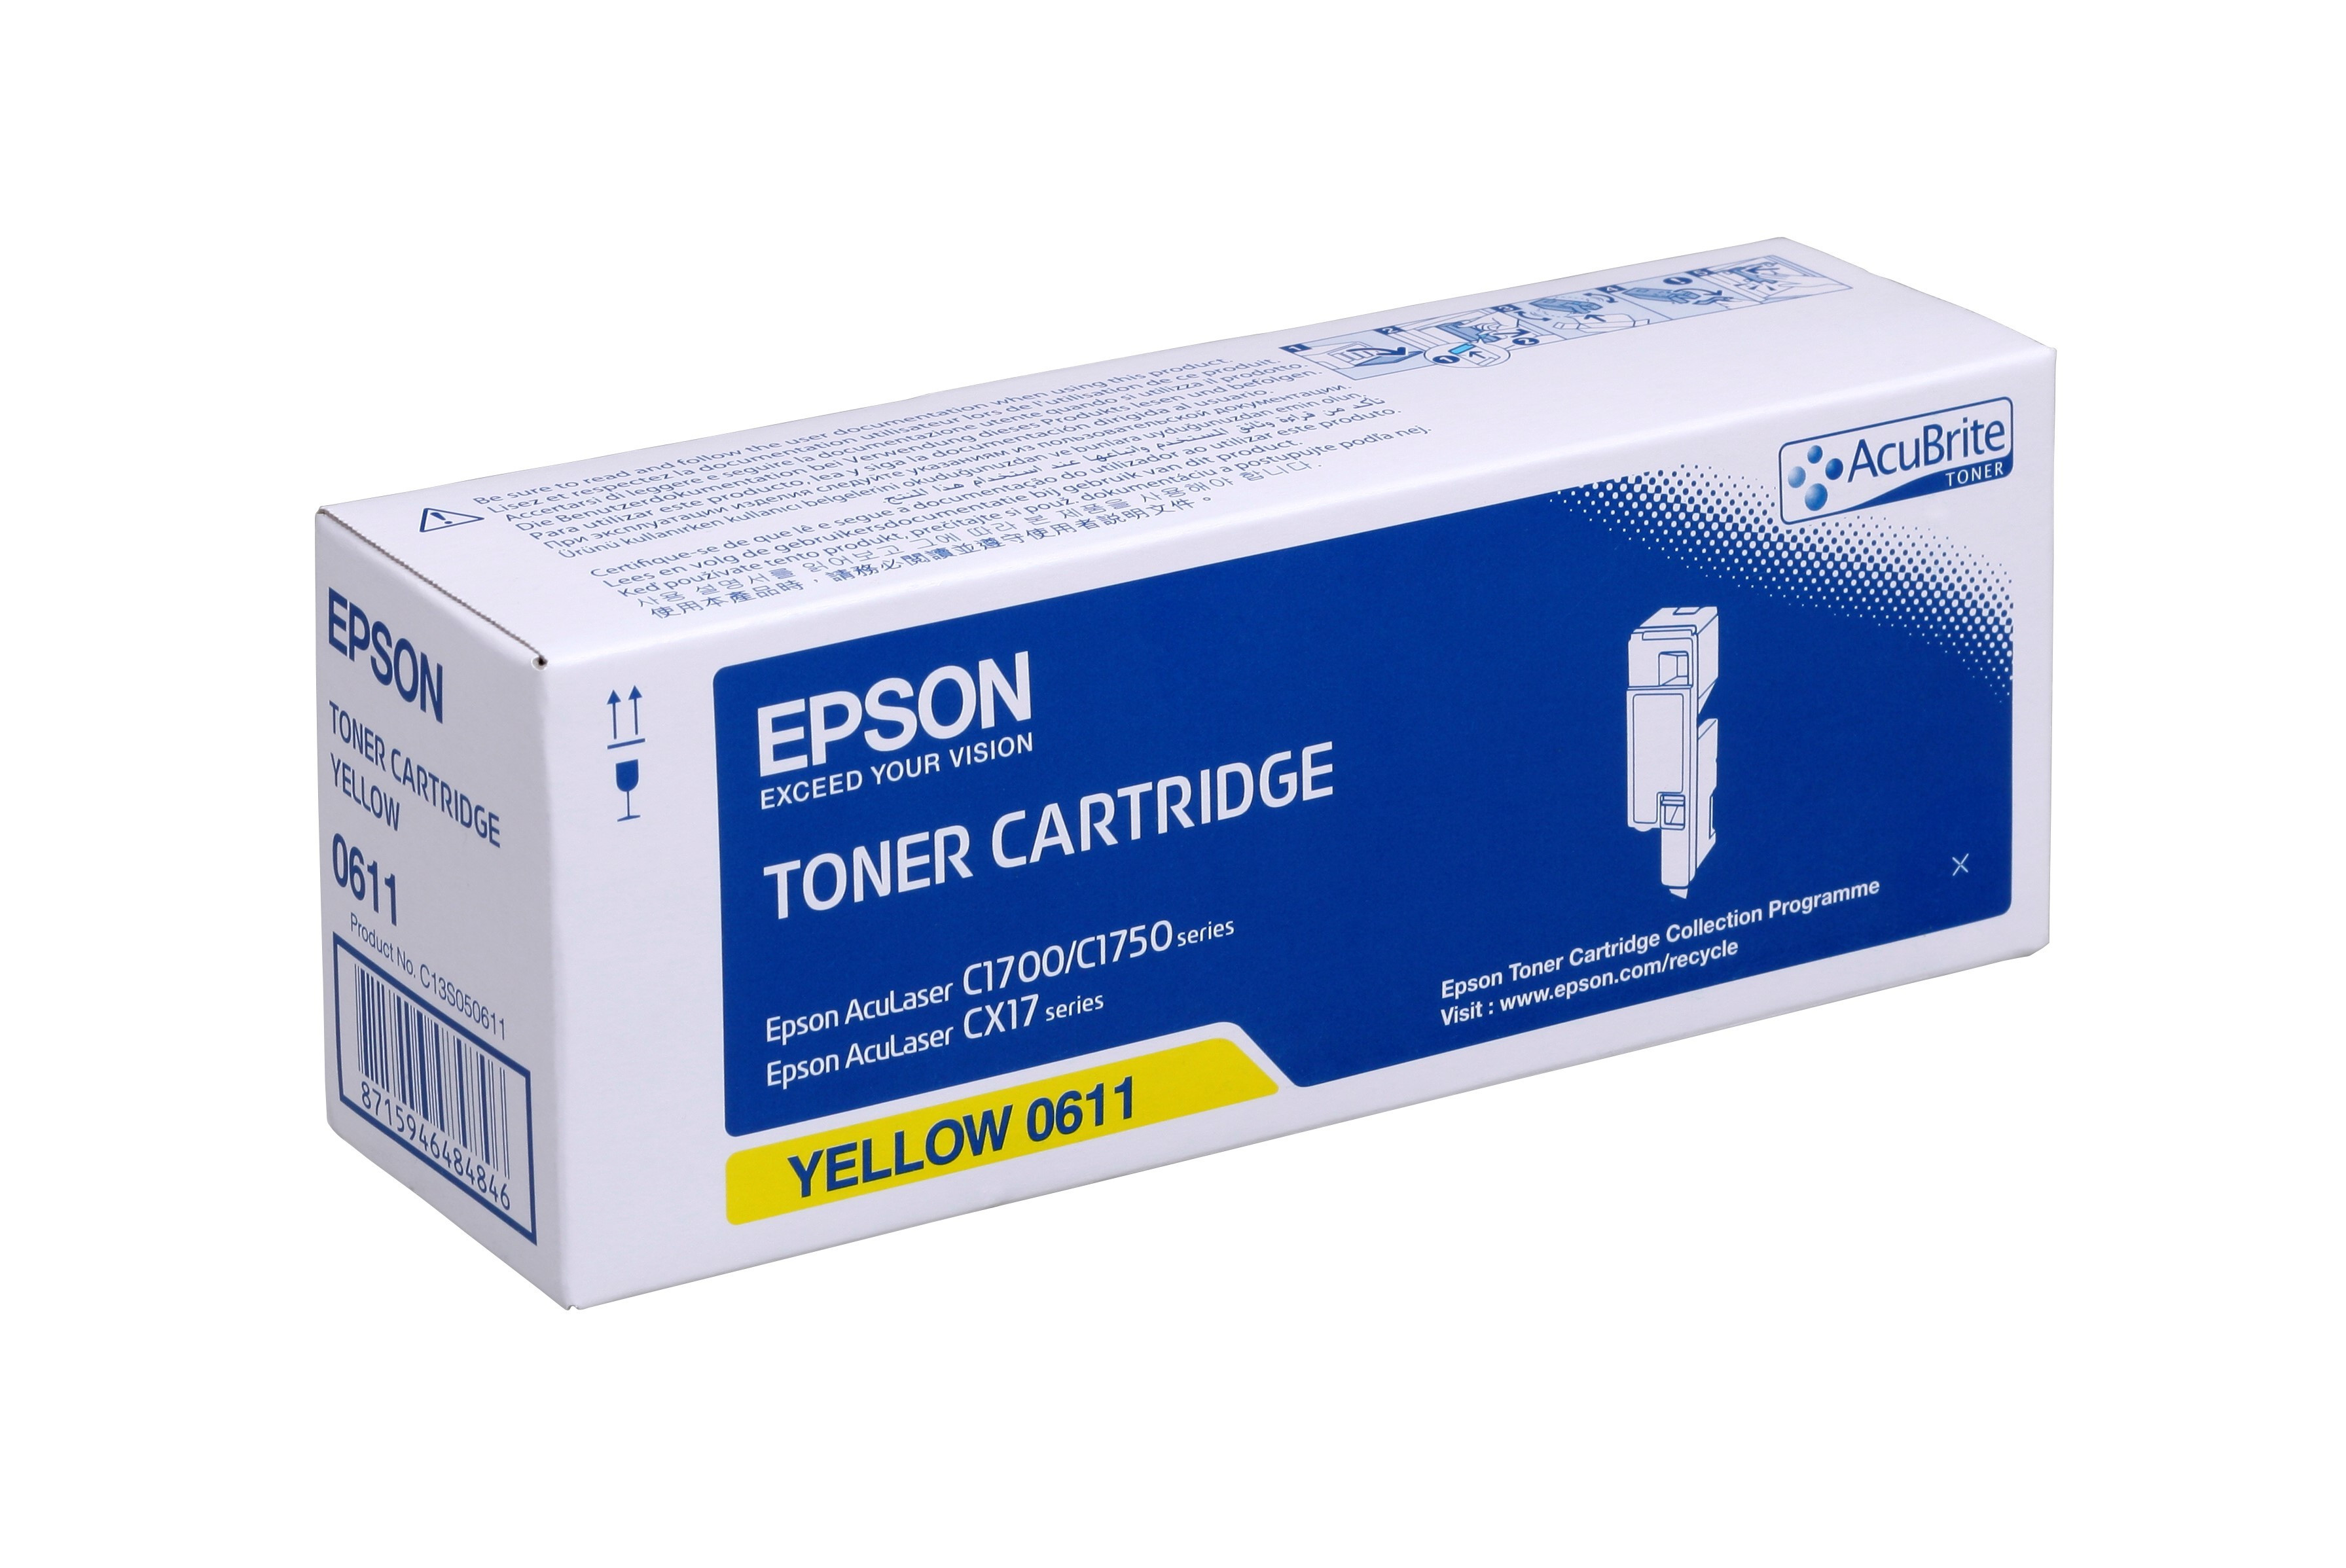 Epson C1700 Toner High Yellow 1,4K (Eredeti)